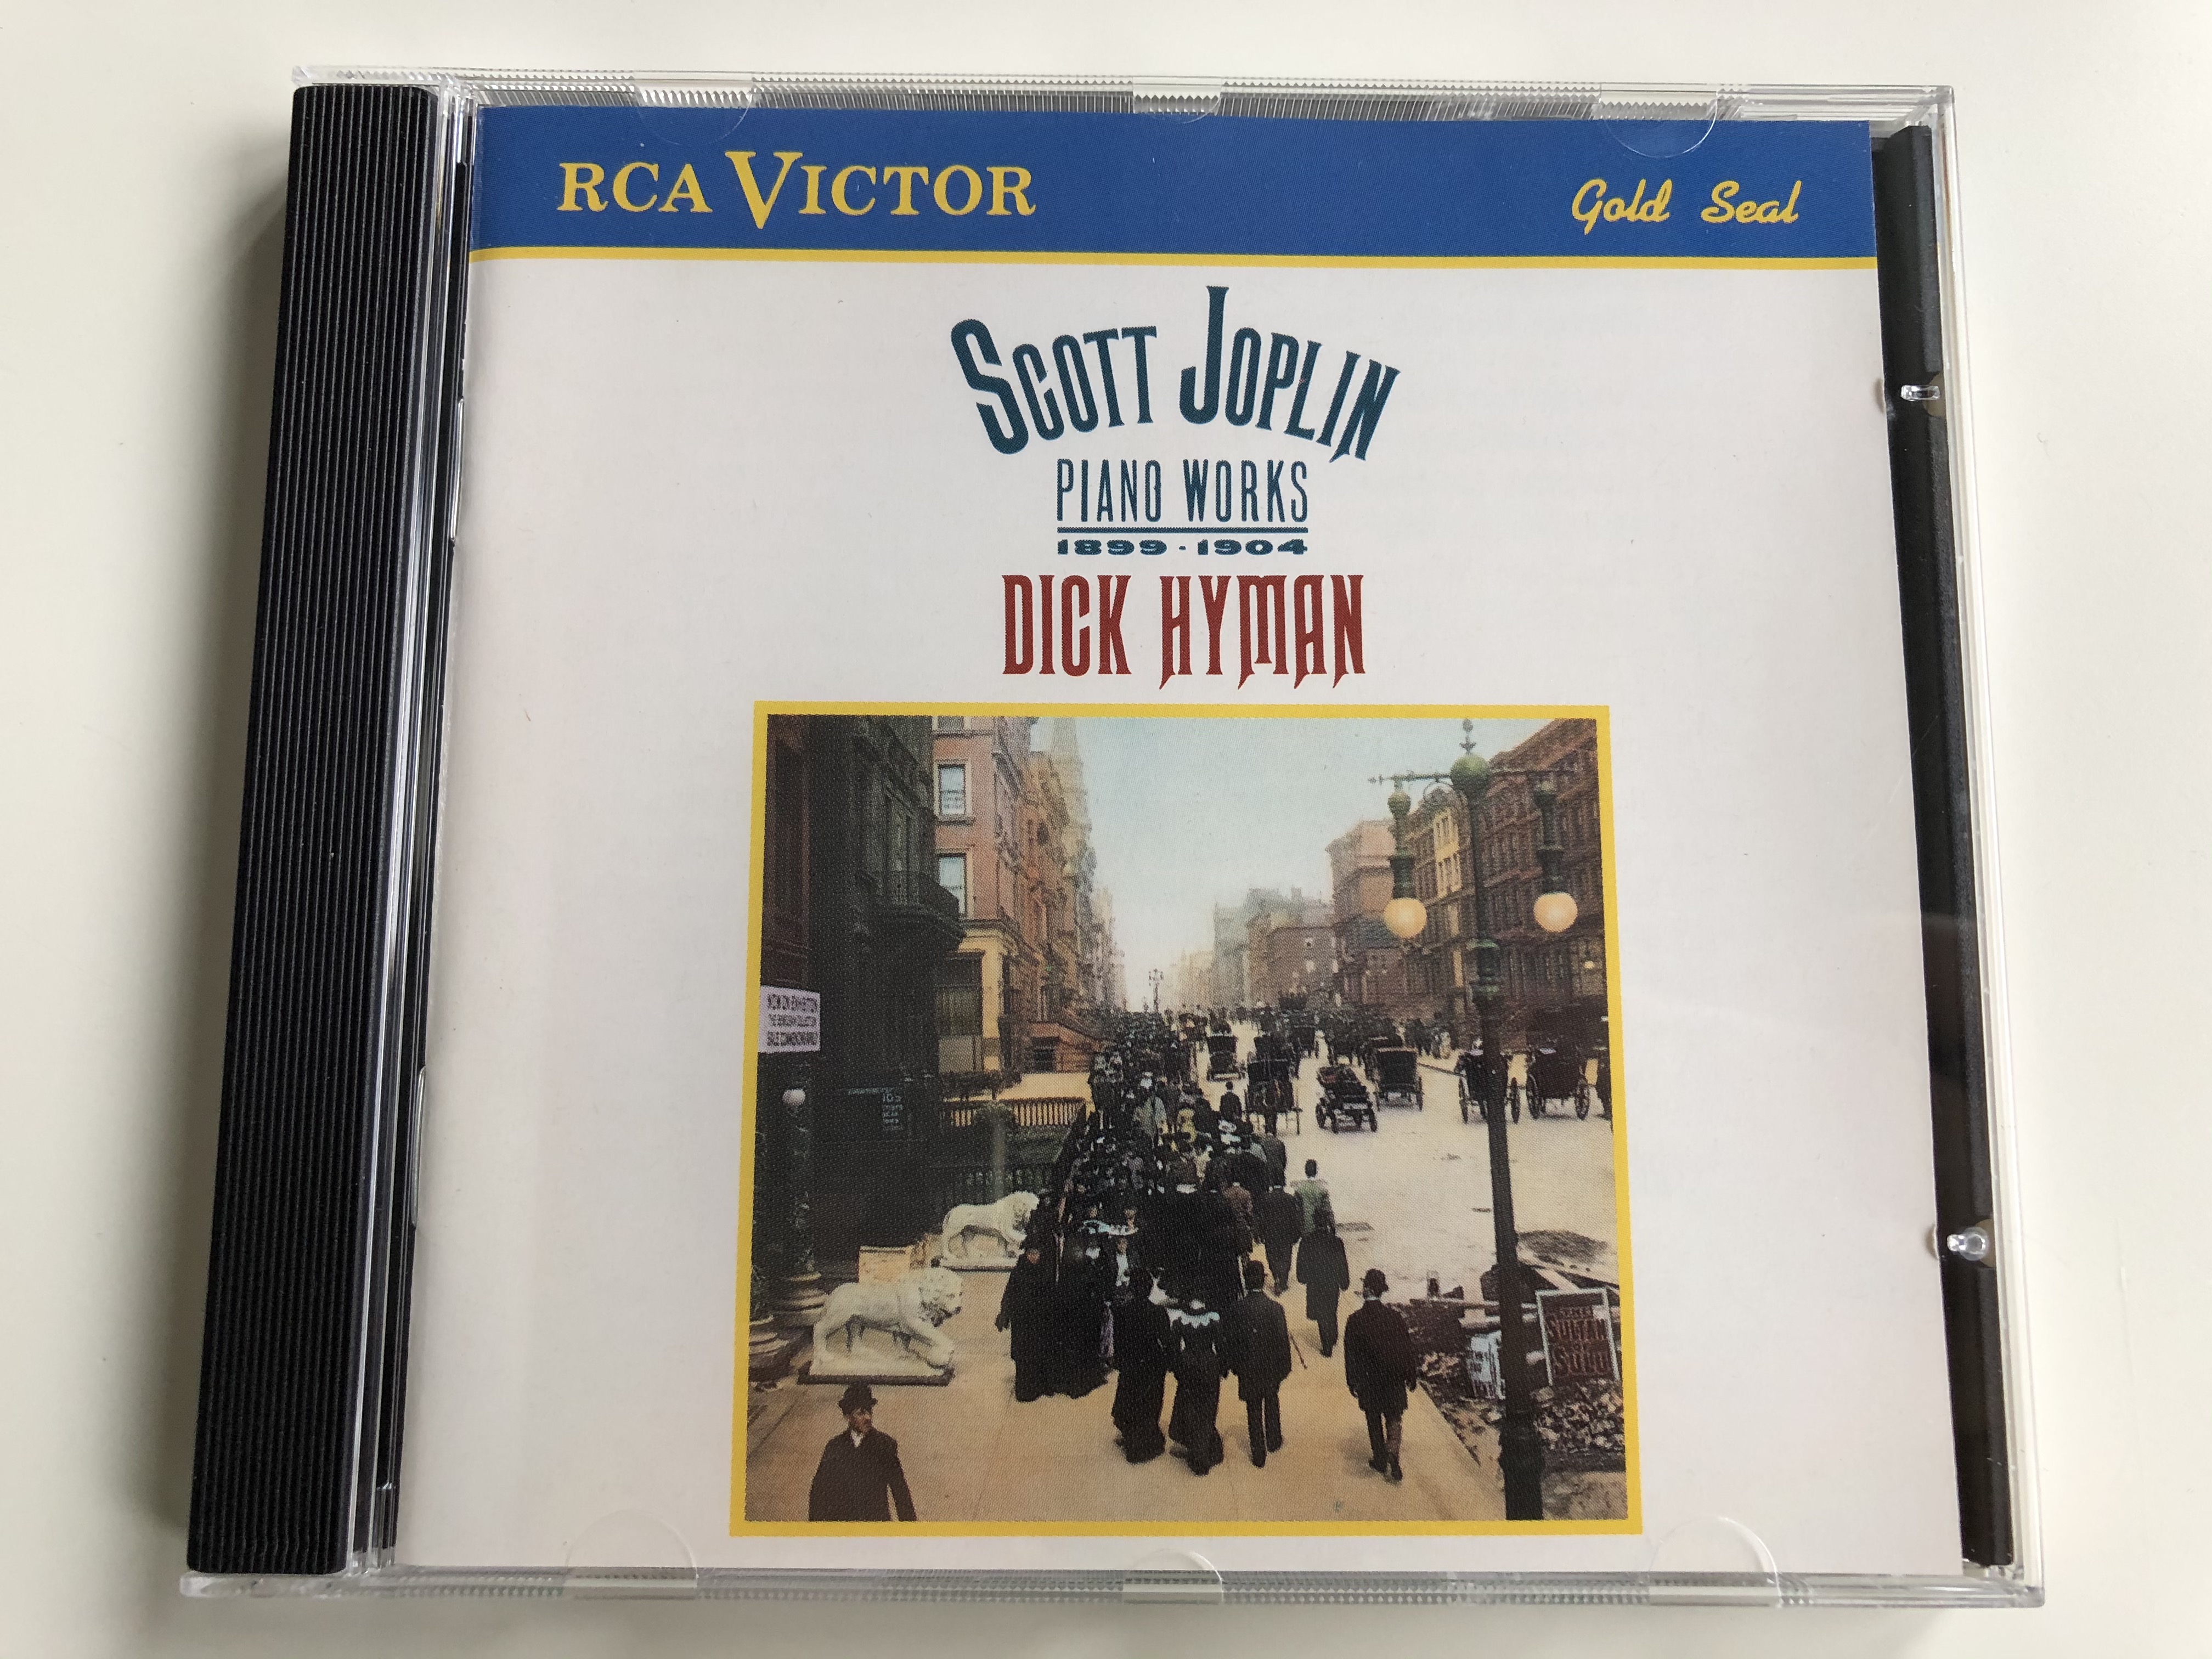 scott-joplin-piano-works-1899-1904-dick-hyman-rca-victor-gold-seal-audio-cd-1988-gd87993-1-.jpg